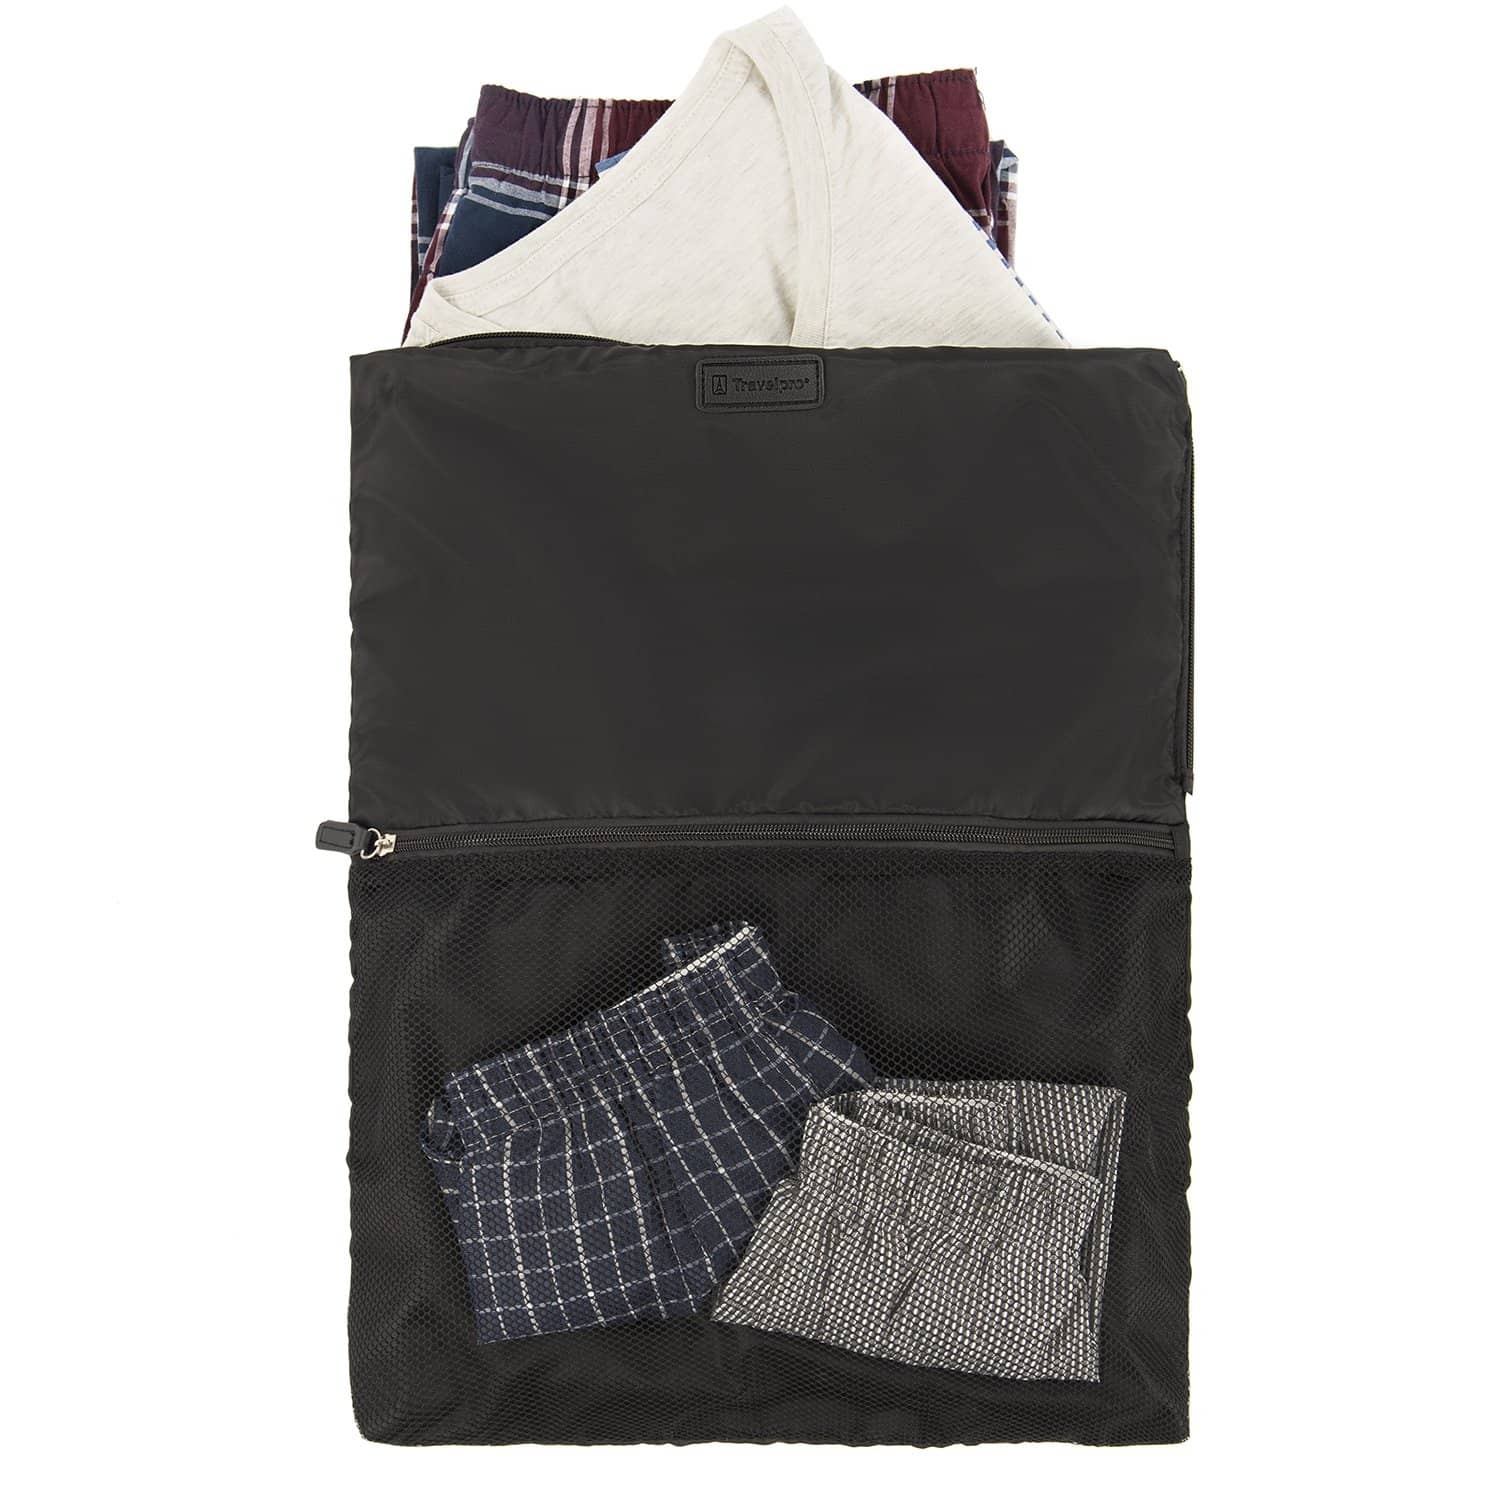 All-Fabric Travel Laundry Stuff Sack